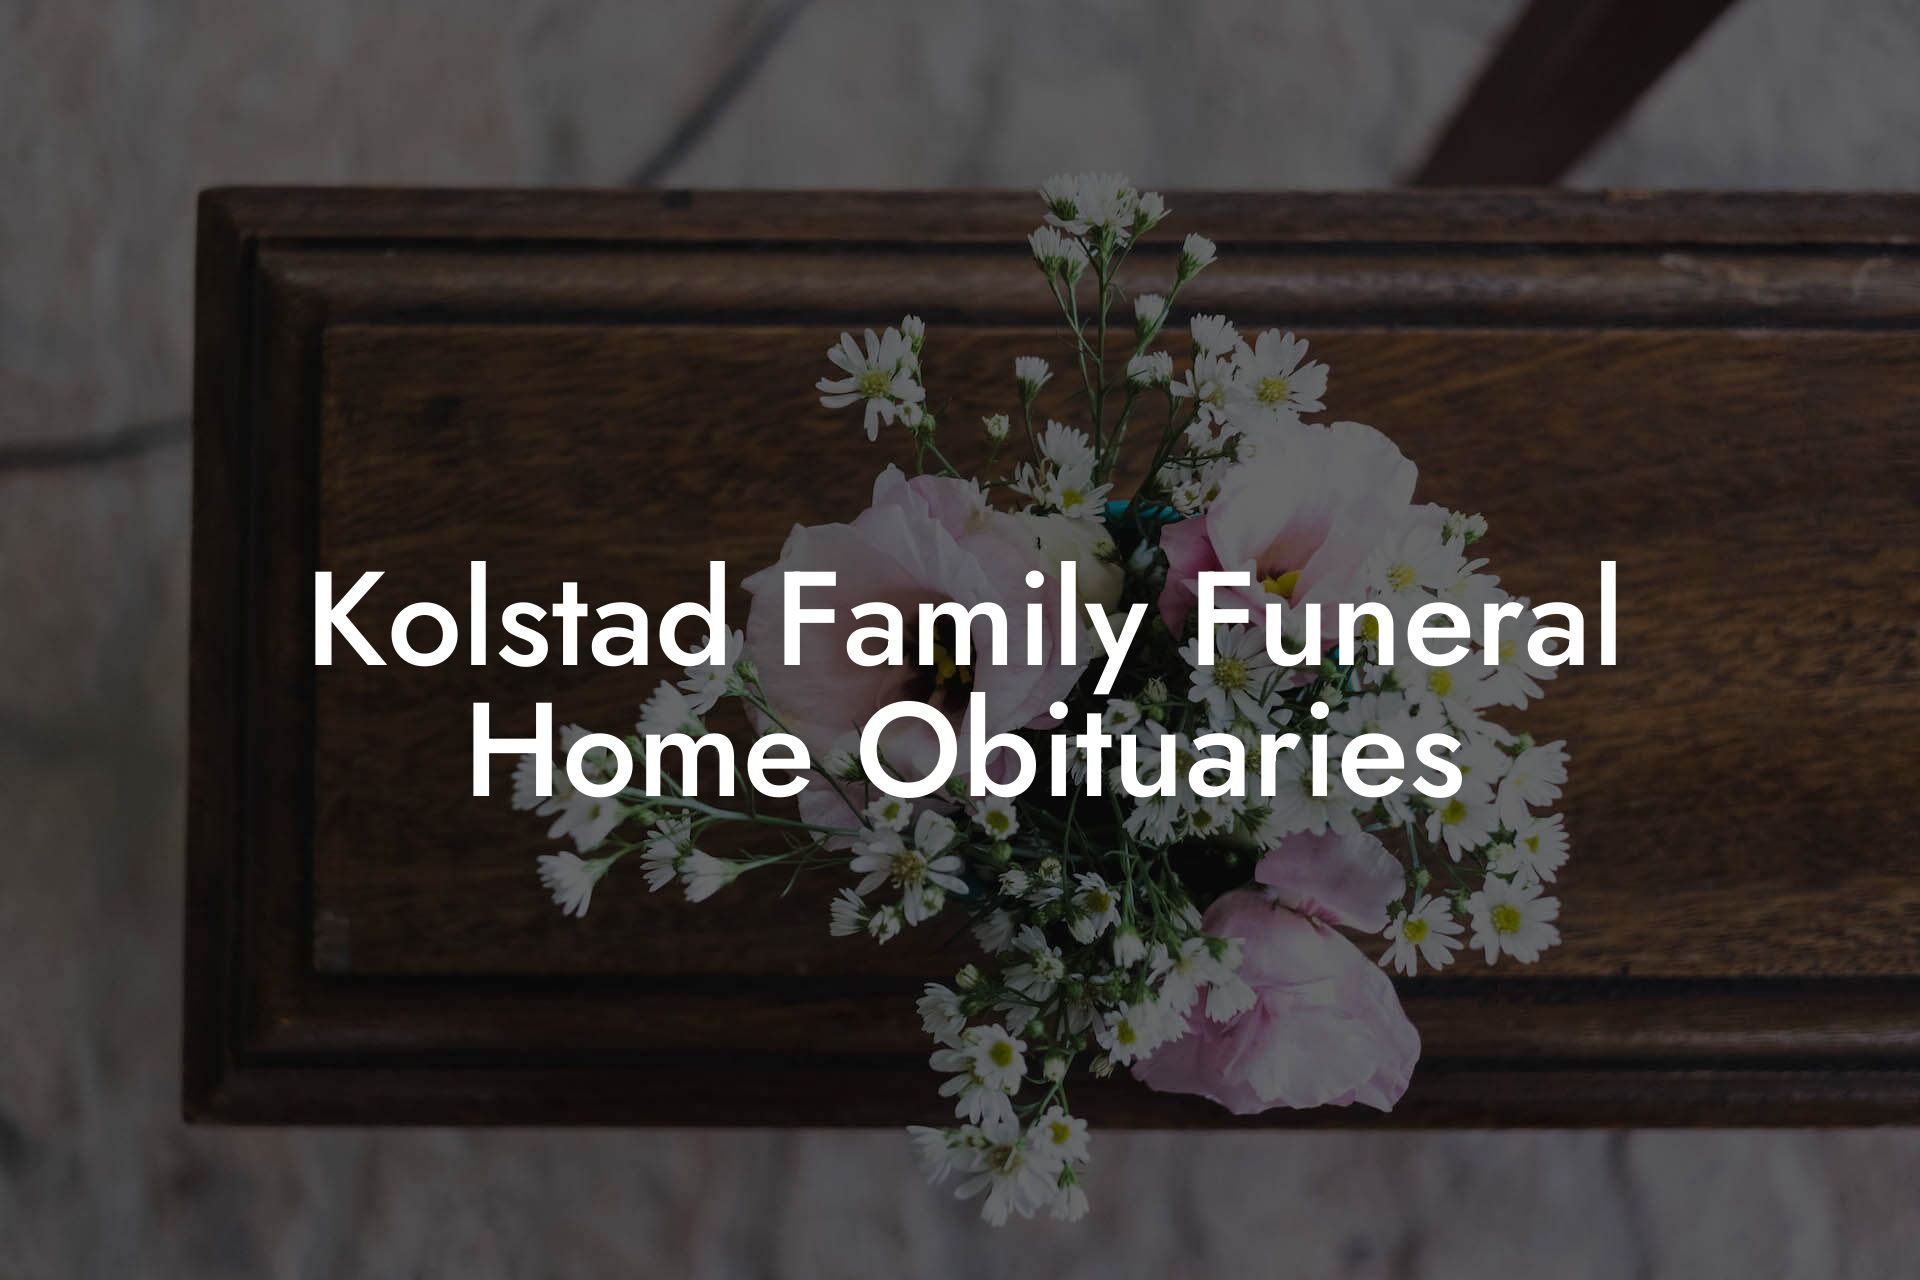 Kolstad Family Funeral Home Obituaries